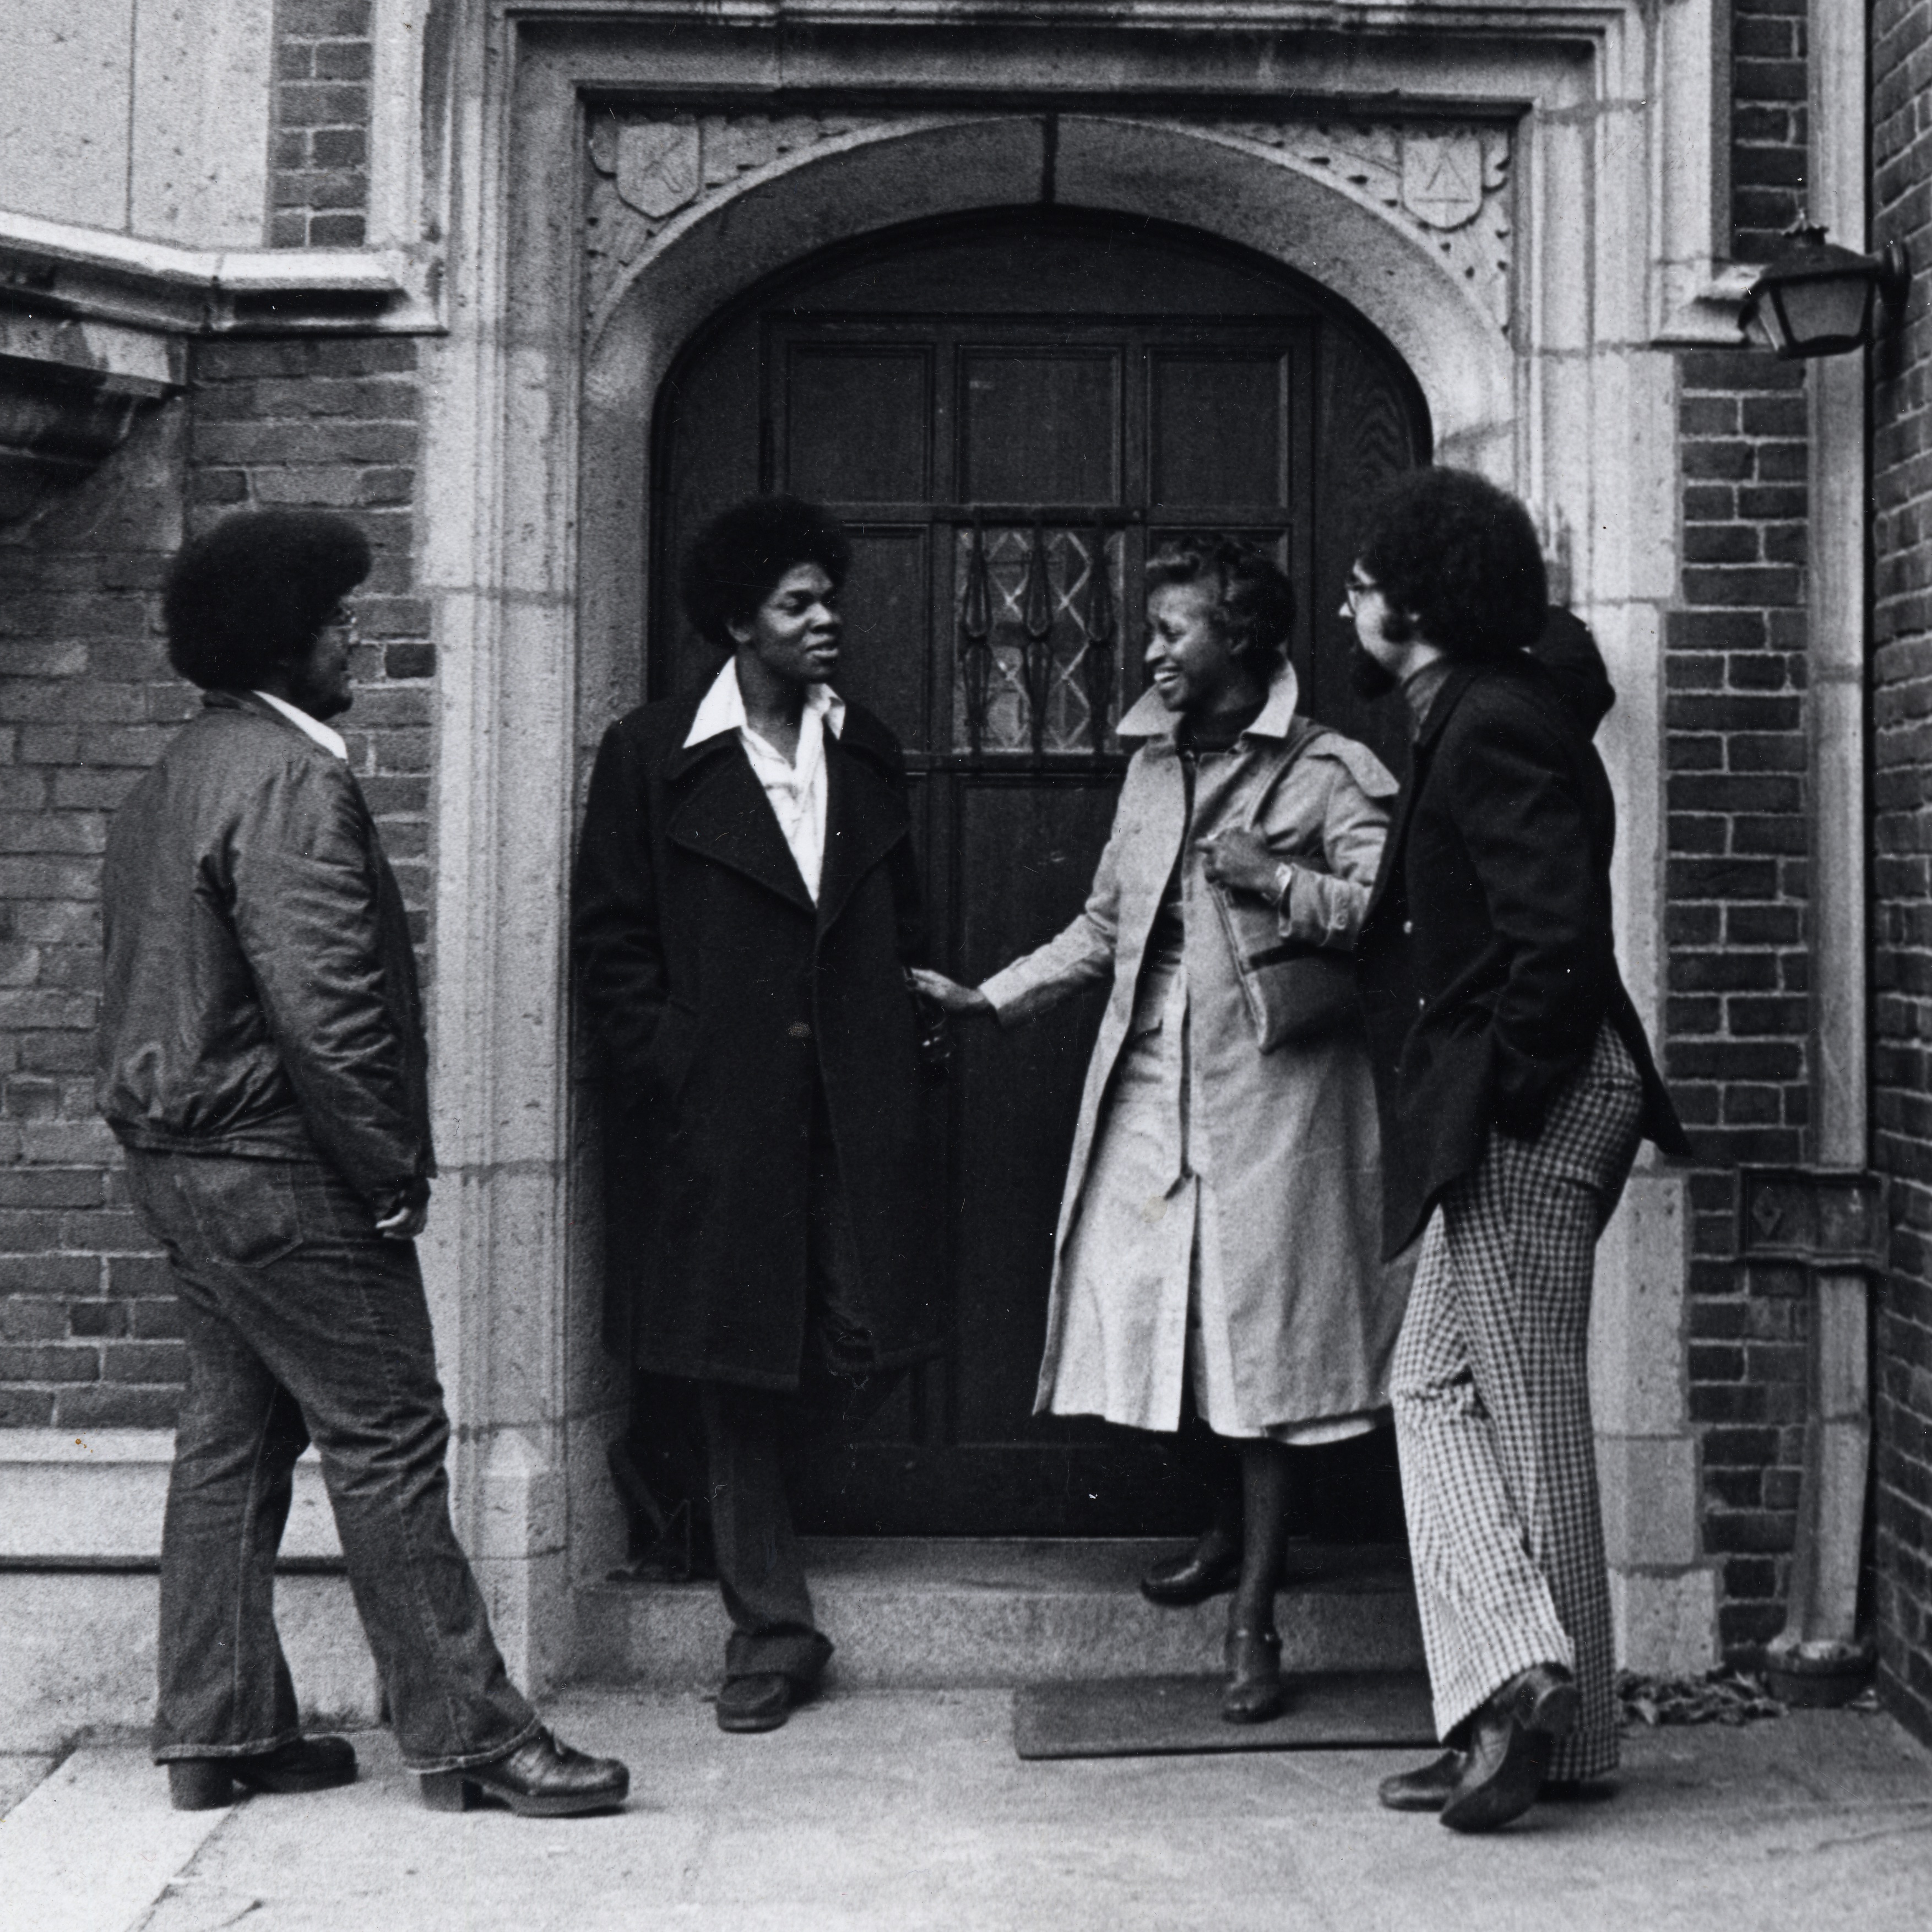 Throwback photo of African-American men in a Yale doorway